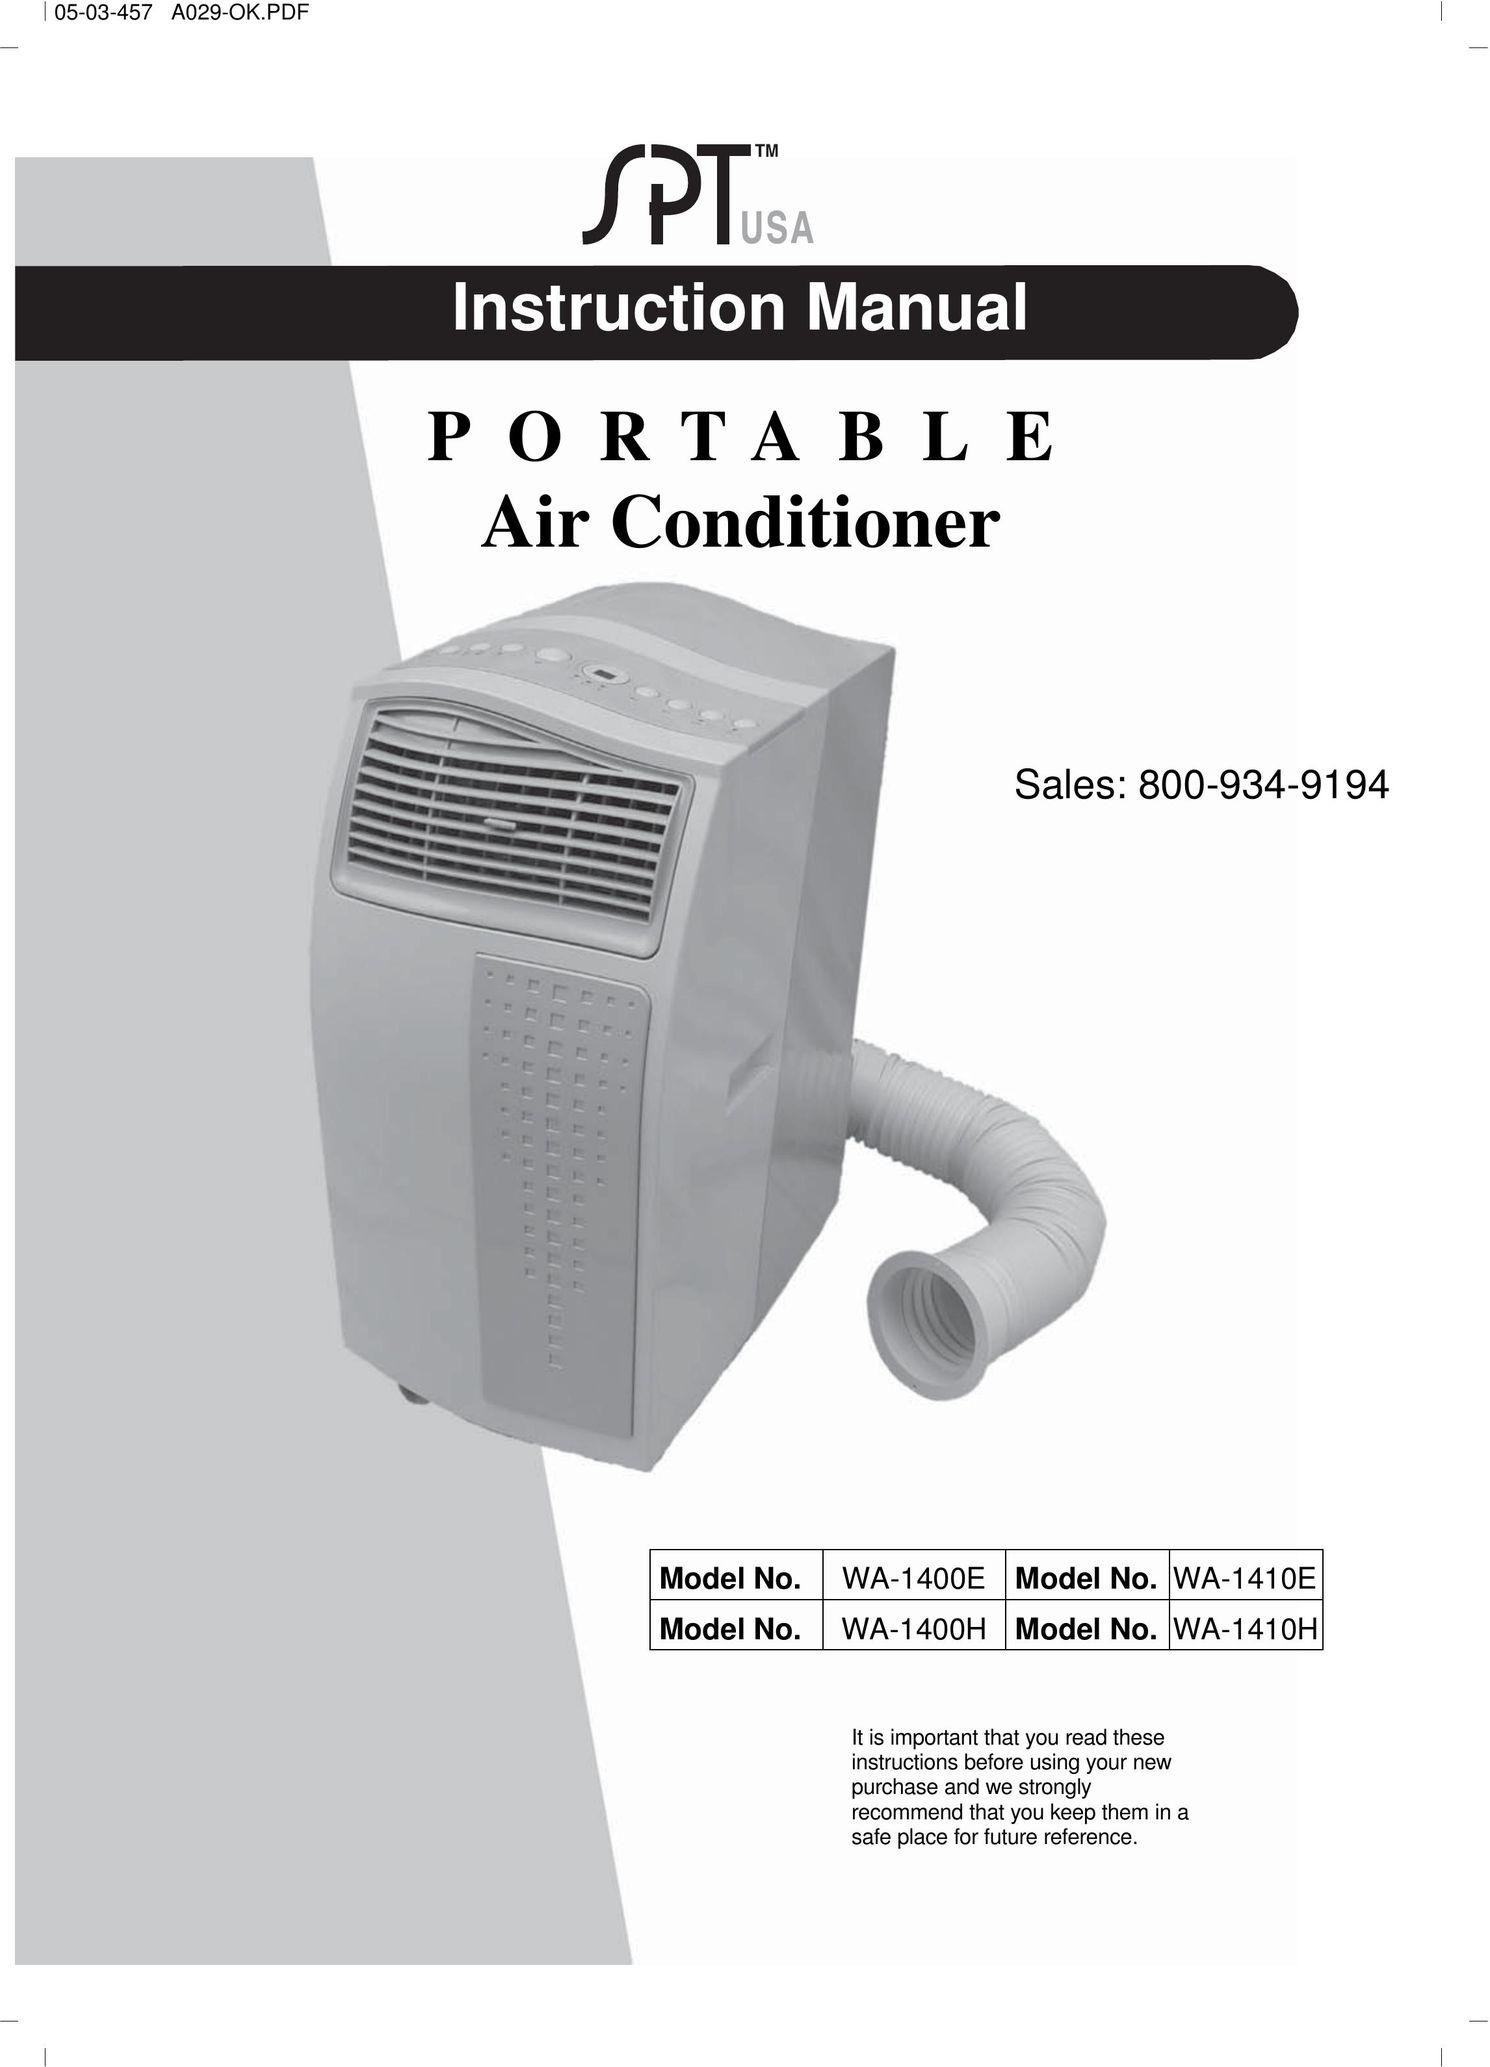 Sunpentown Intl WA-1410E Air Conditioner User Manual